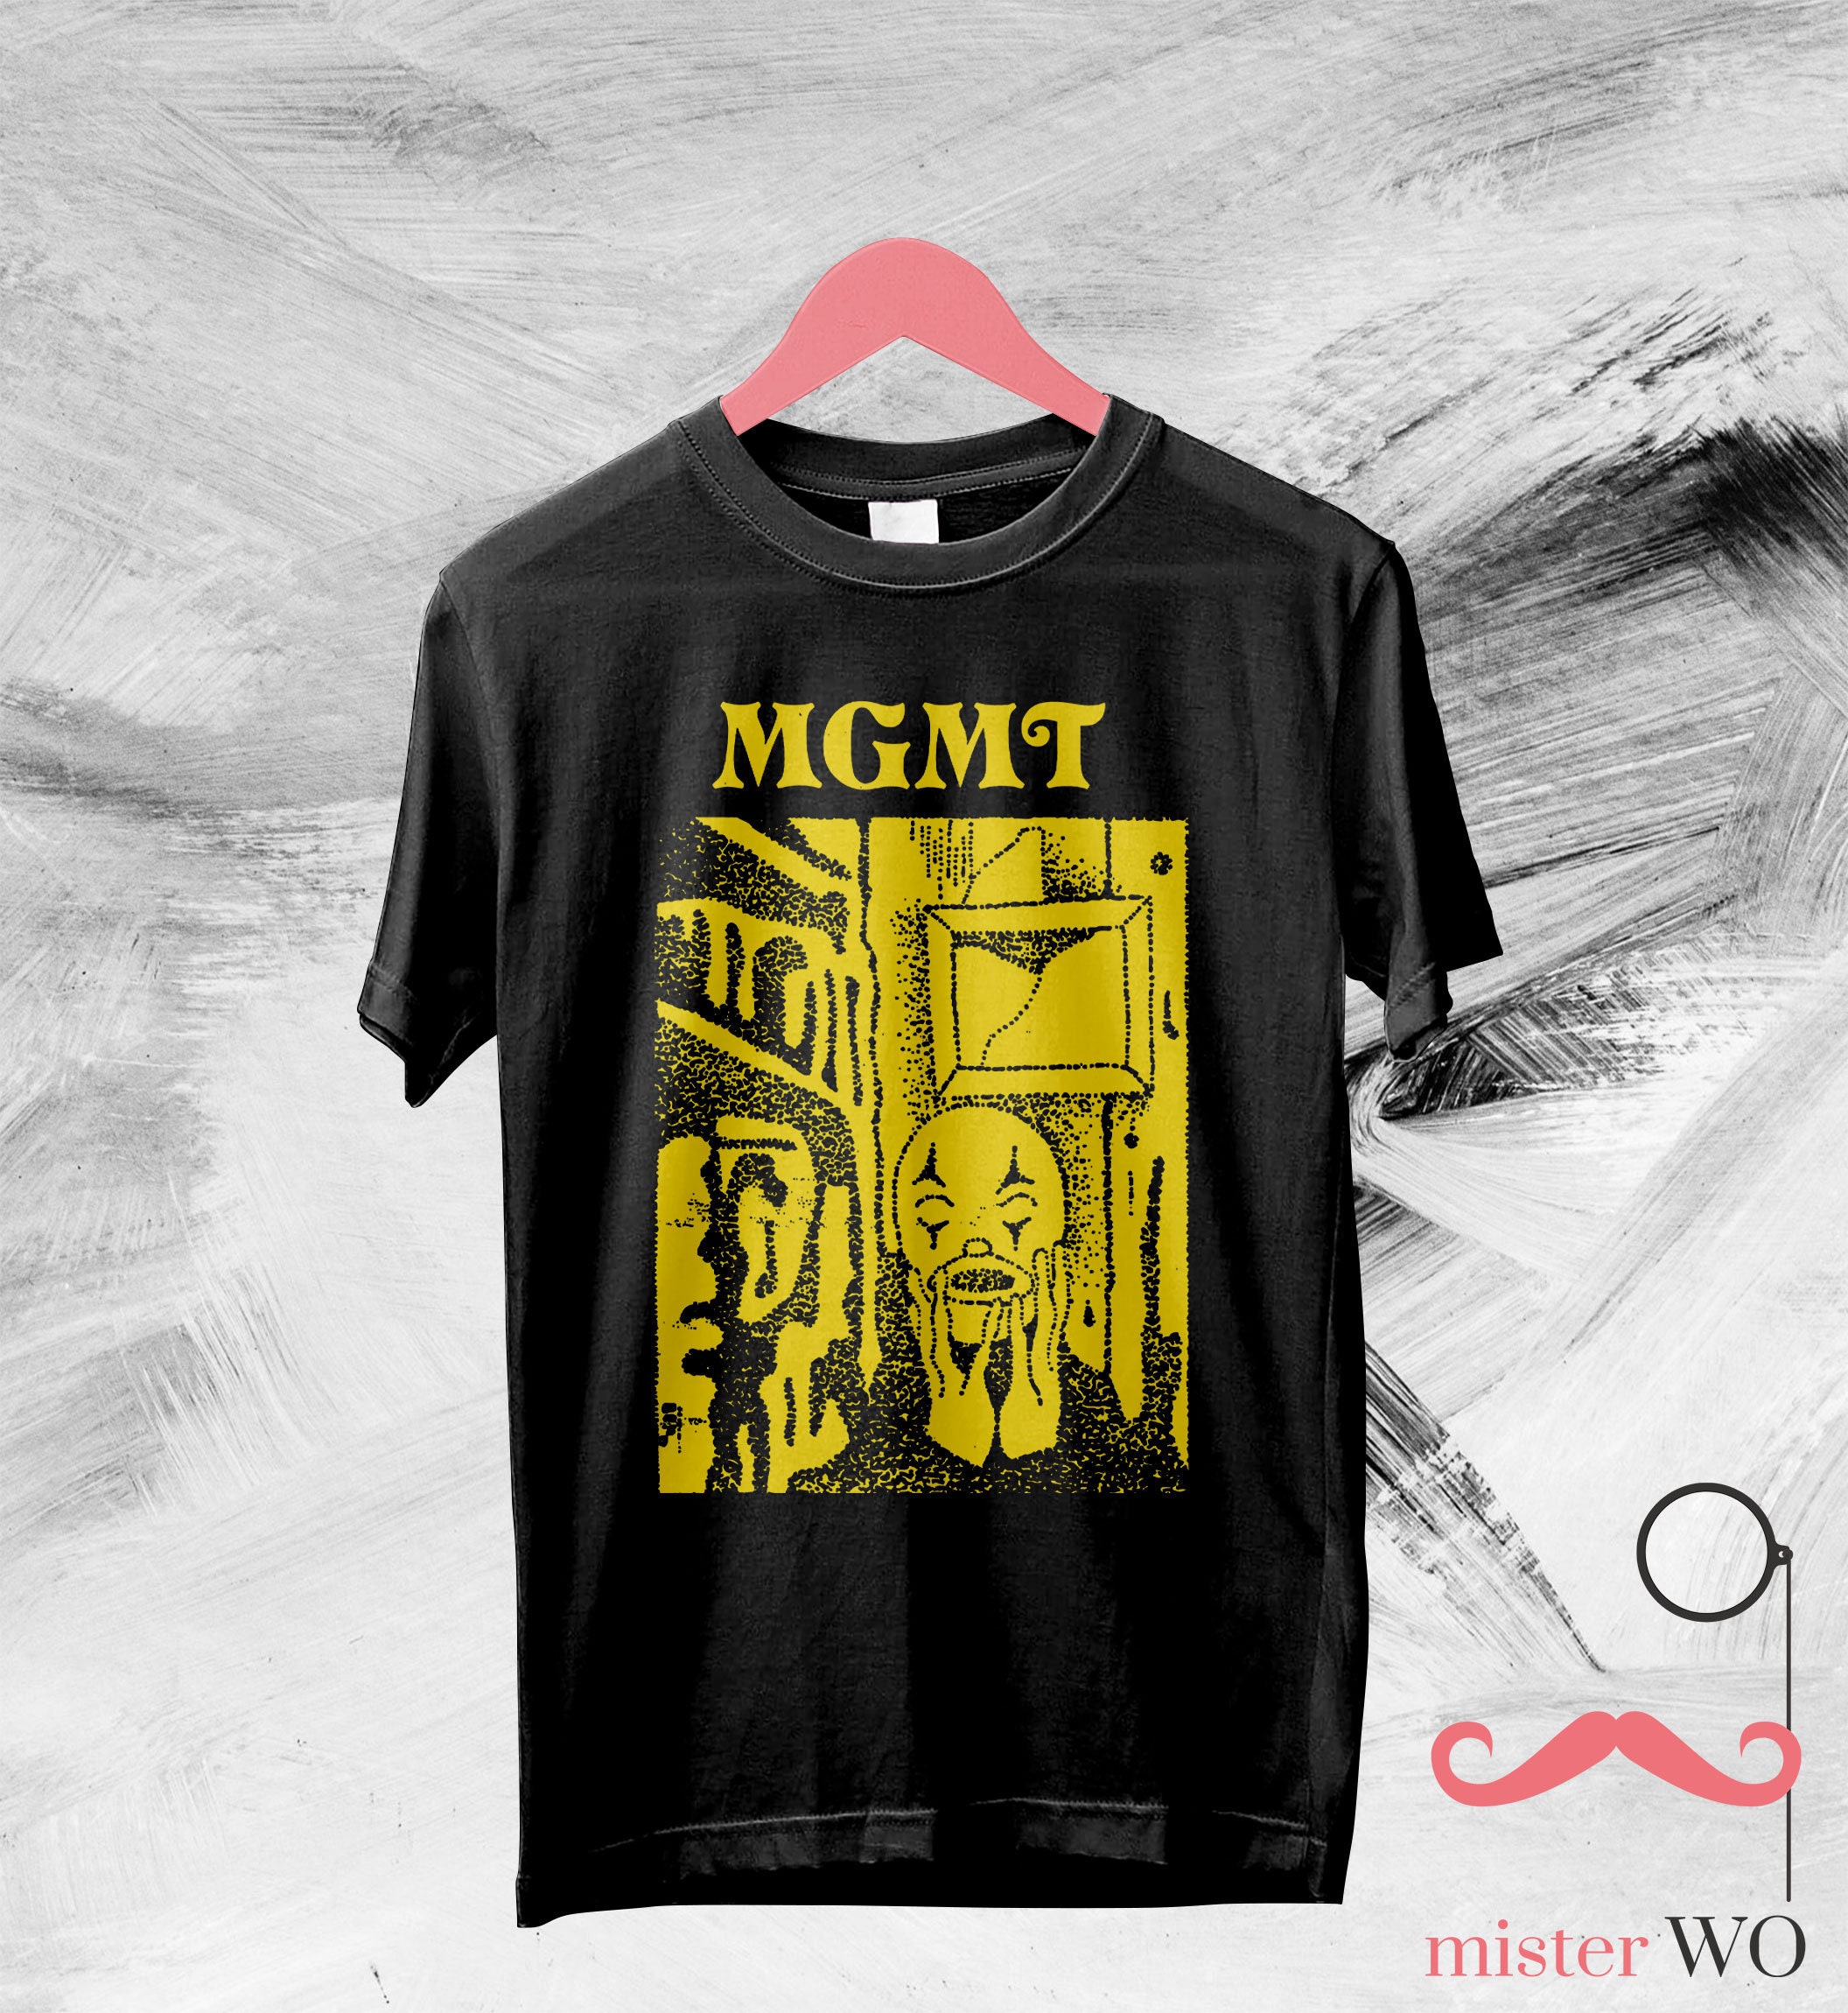 MGMT Little Dark Age Album T-Shirt - MGMT Shirt, Classic Rock Shirt, Andrew VanWyngarden, Ben Goldwasser